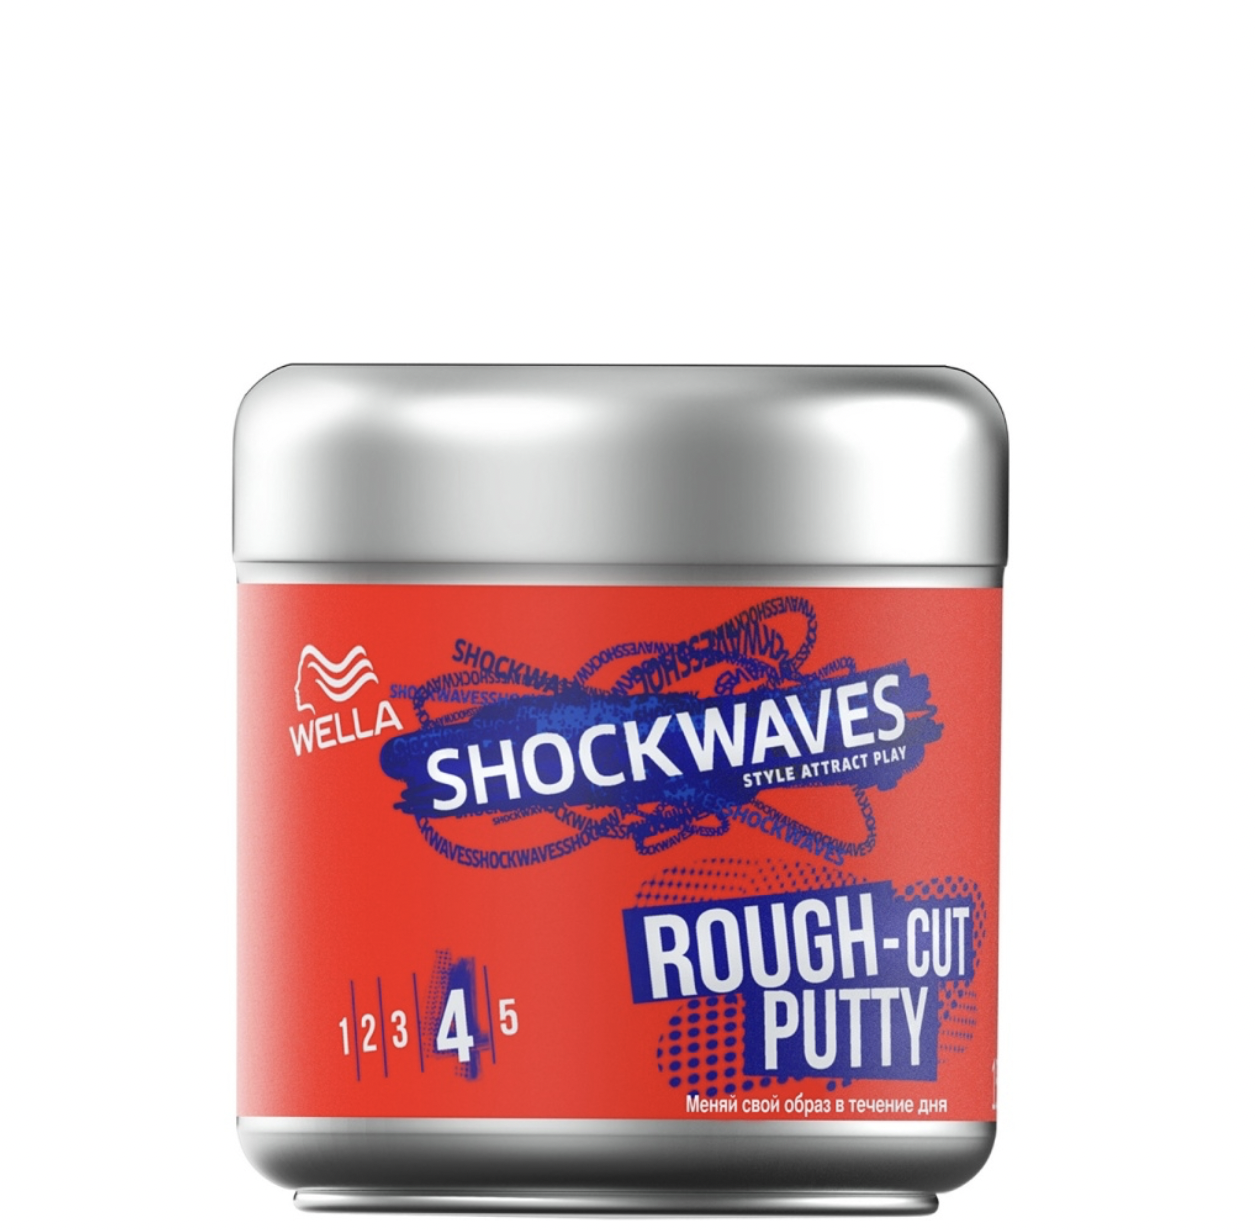   / Wella Shockwaves -     Rough-cut putty 150 